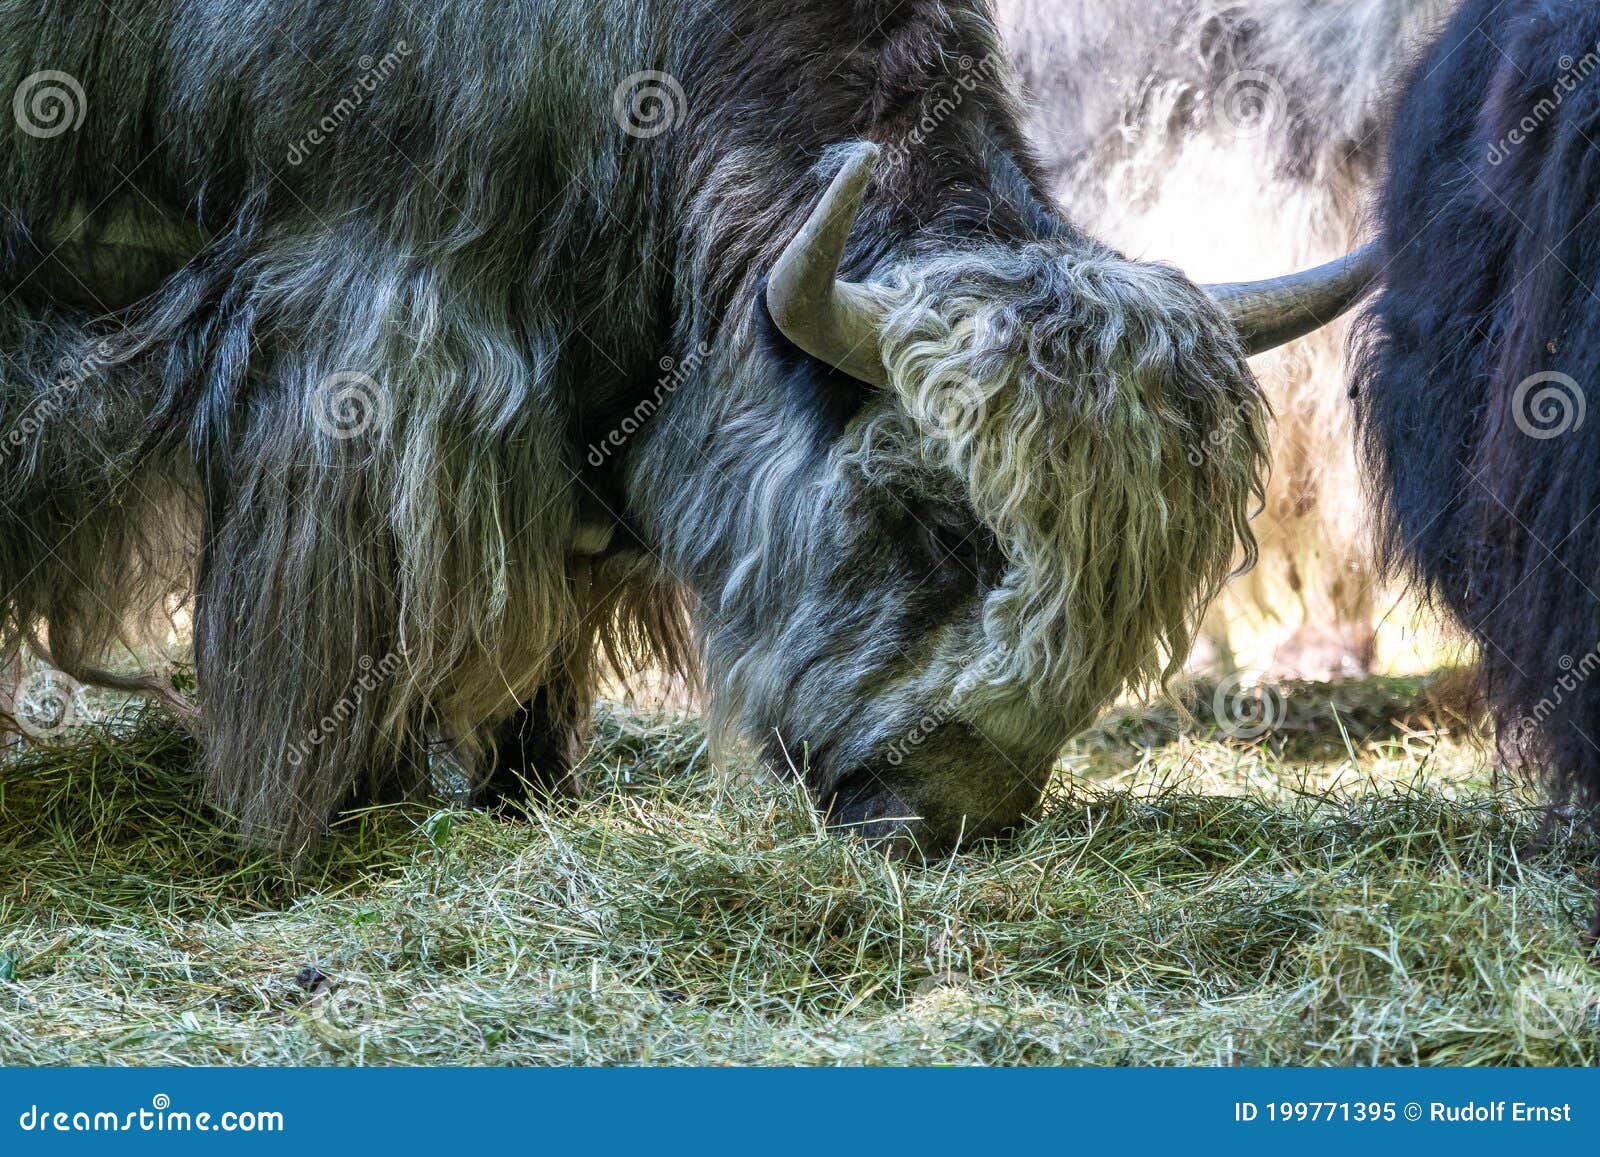 Ved lov retort ødemark The Domestic Yak, Bos Mutus Grunniens in a Park Stock Image - Image of  mammal, milk: 199771395